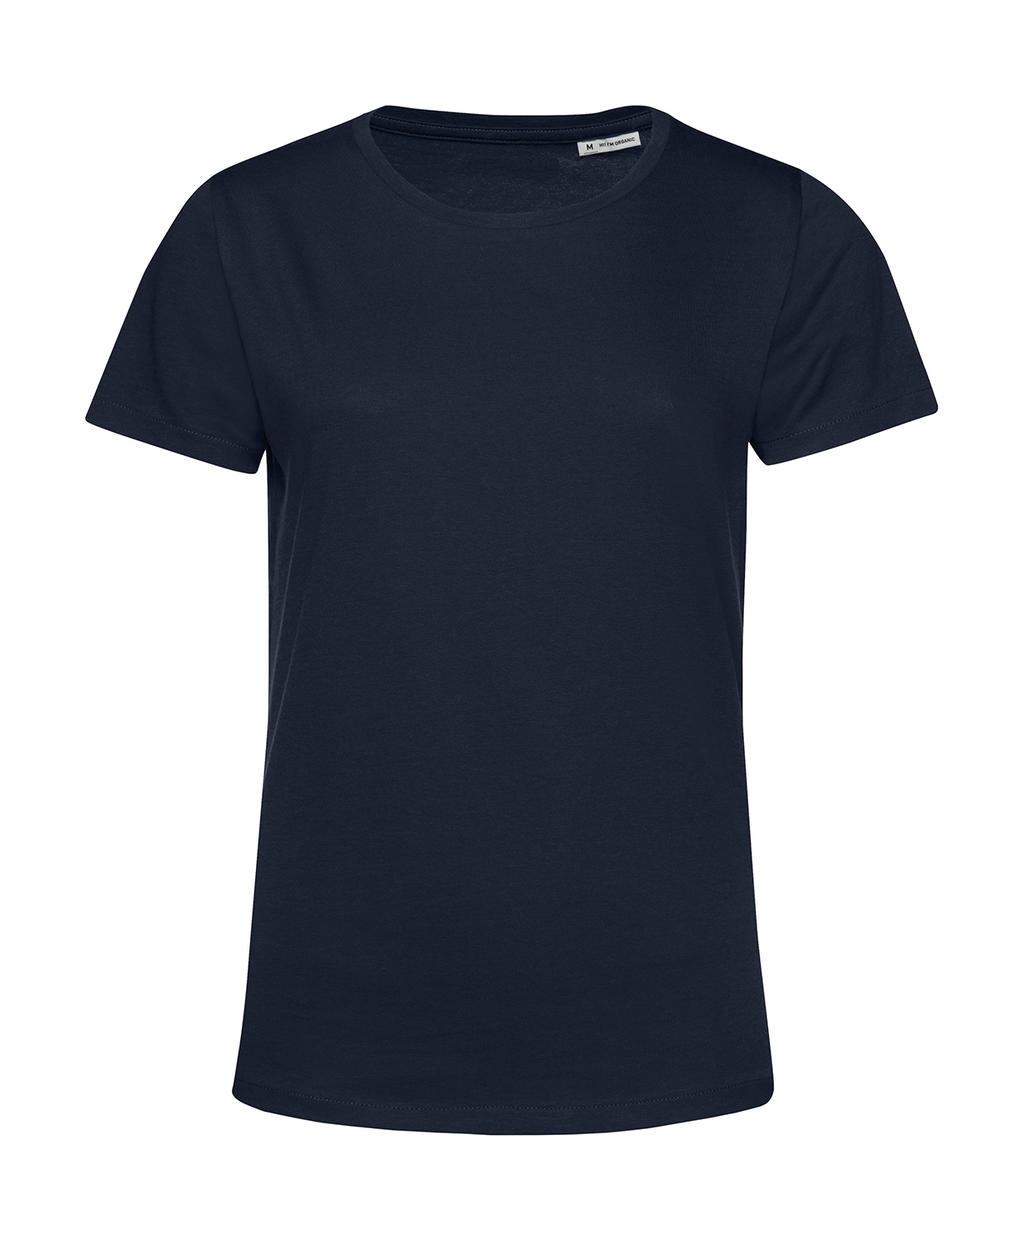 Dámske tričko #organic inspire E150 /women - navy blue